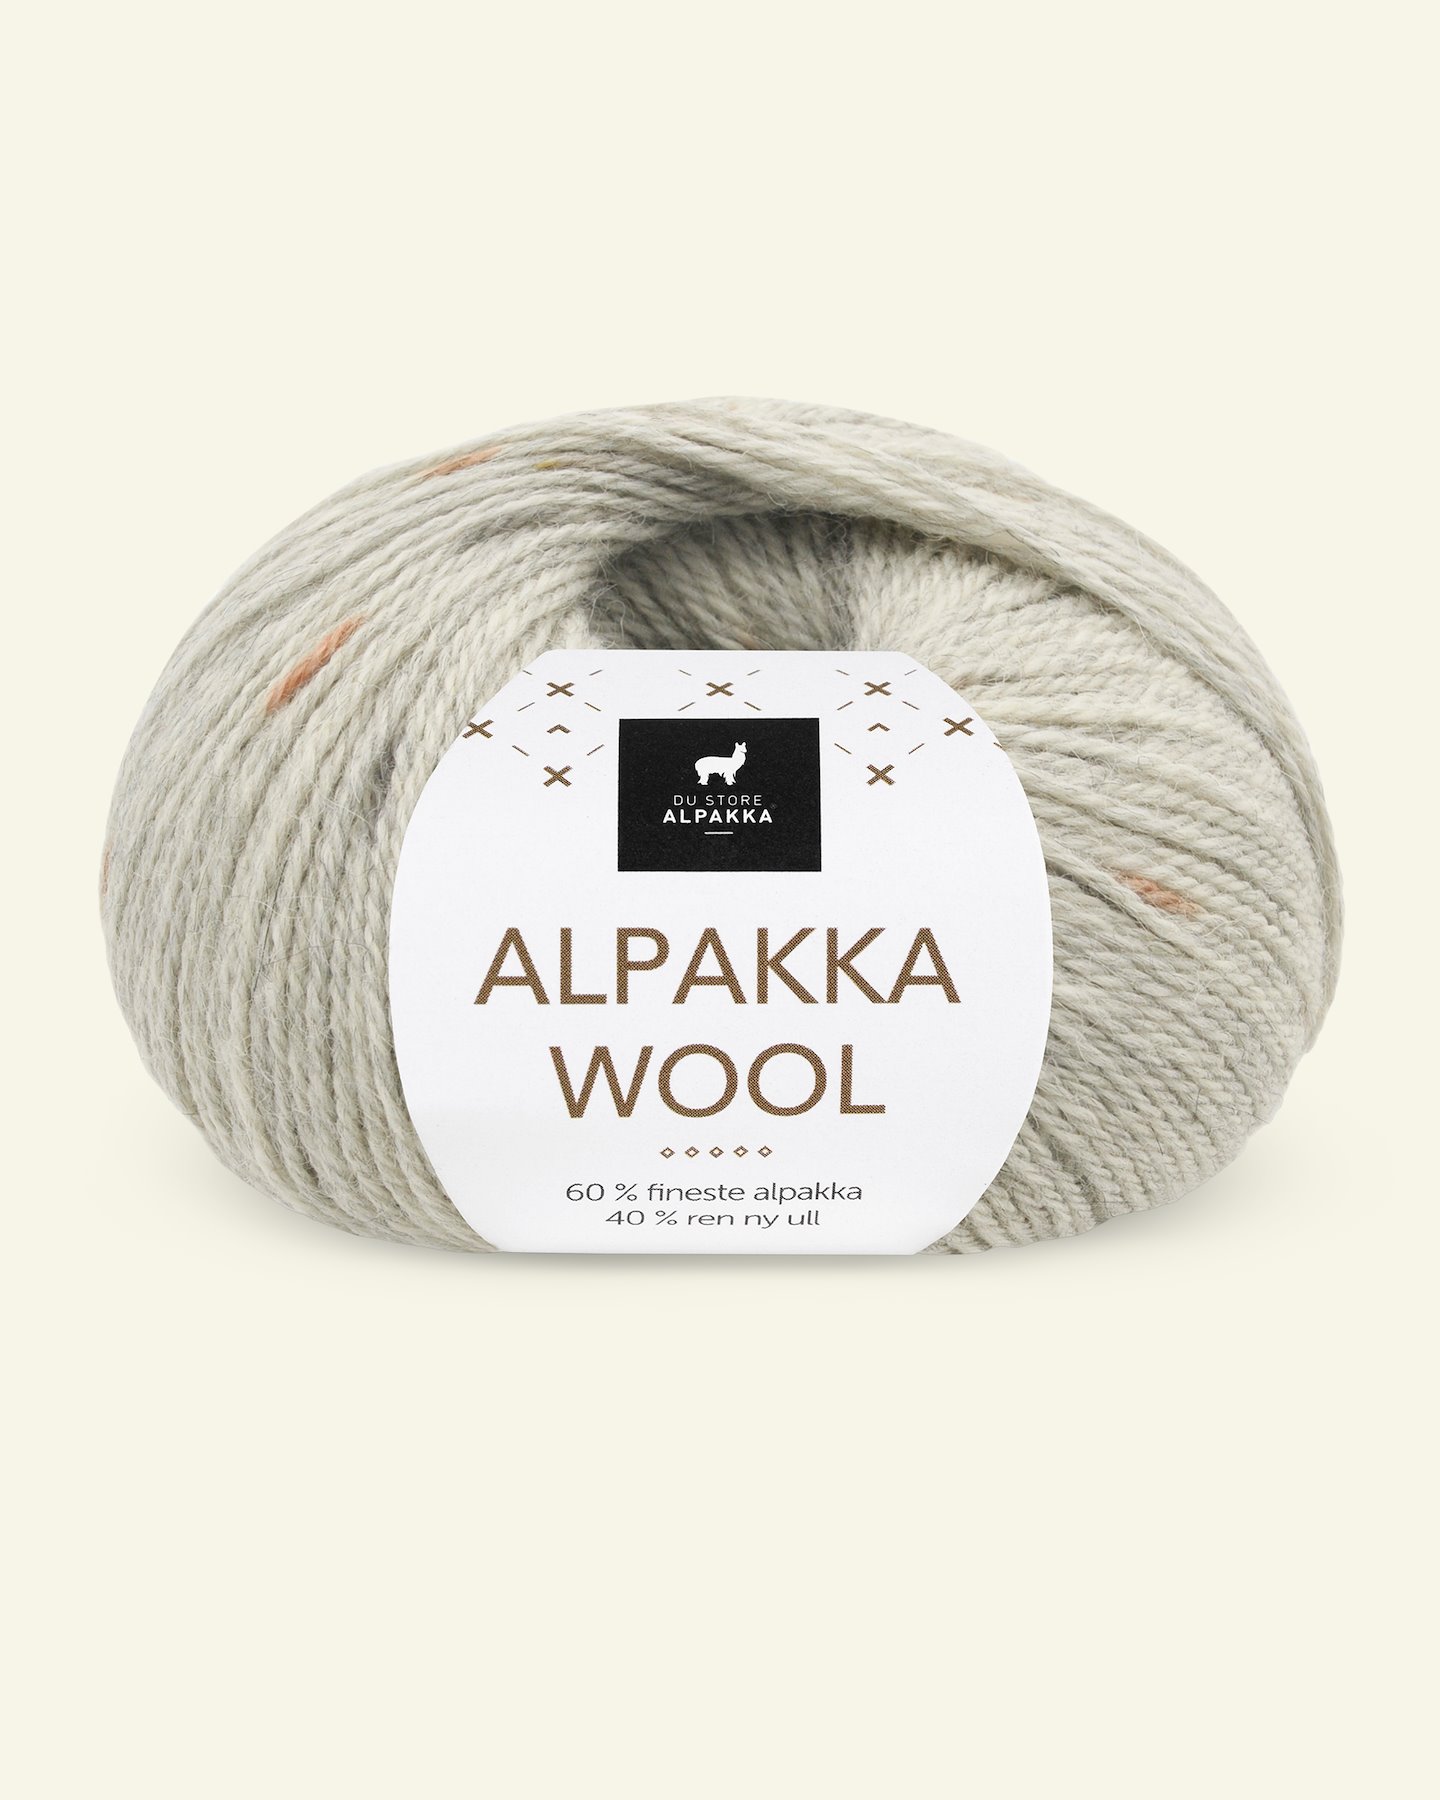 Du Store Alpakka, Alpakka Wool grå/camel 90001241_pack